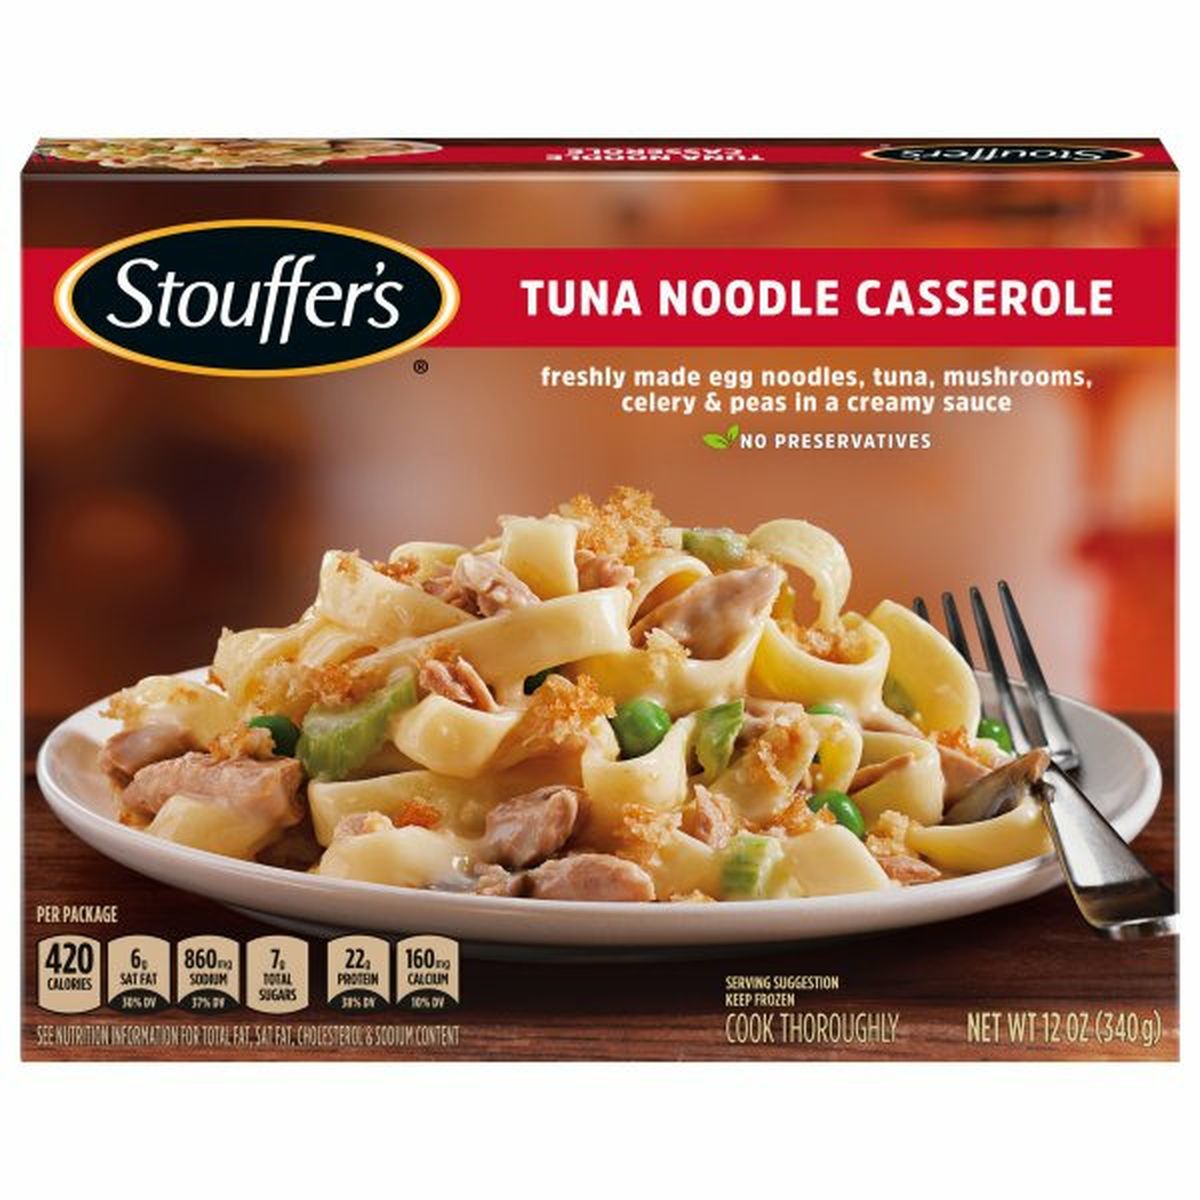 Calories in Stouffer's Tuna Noodle Casserole